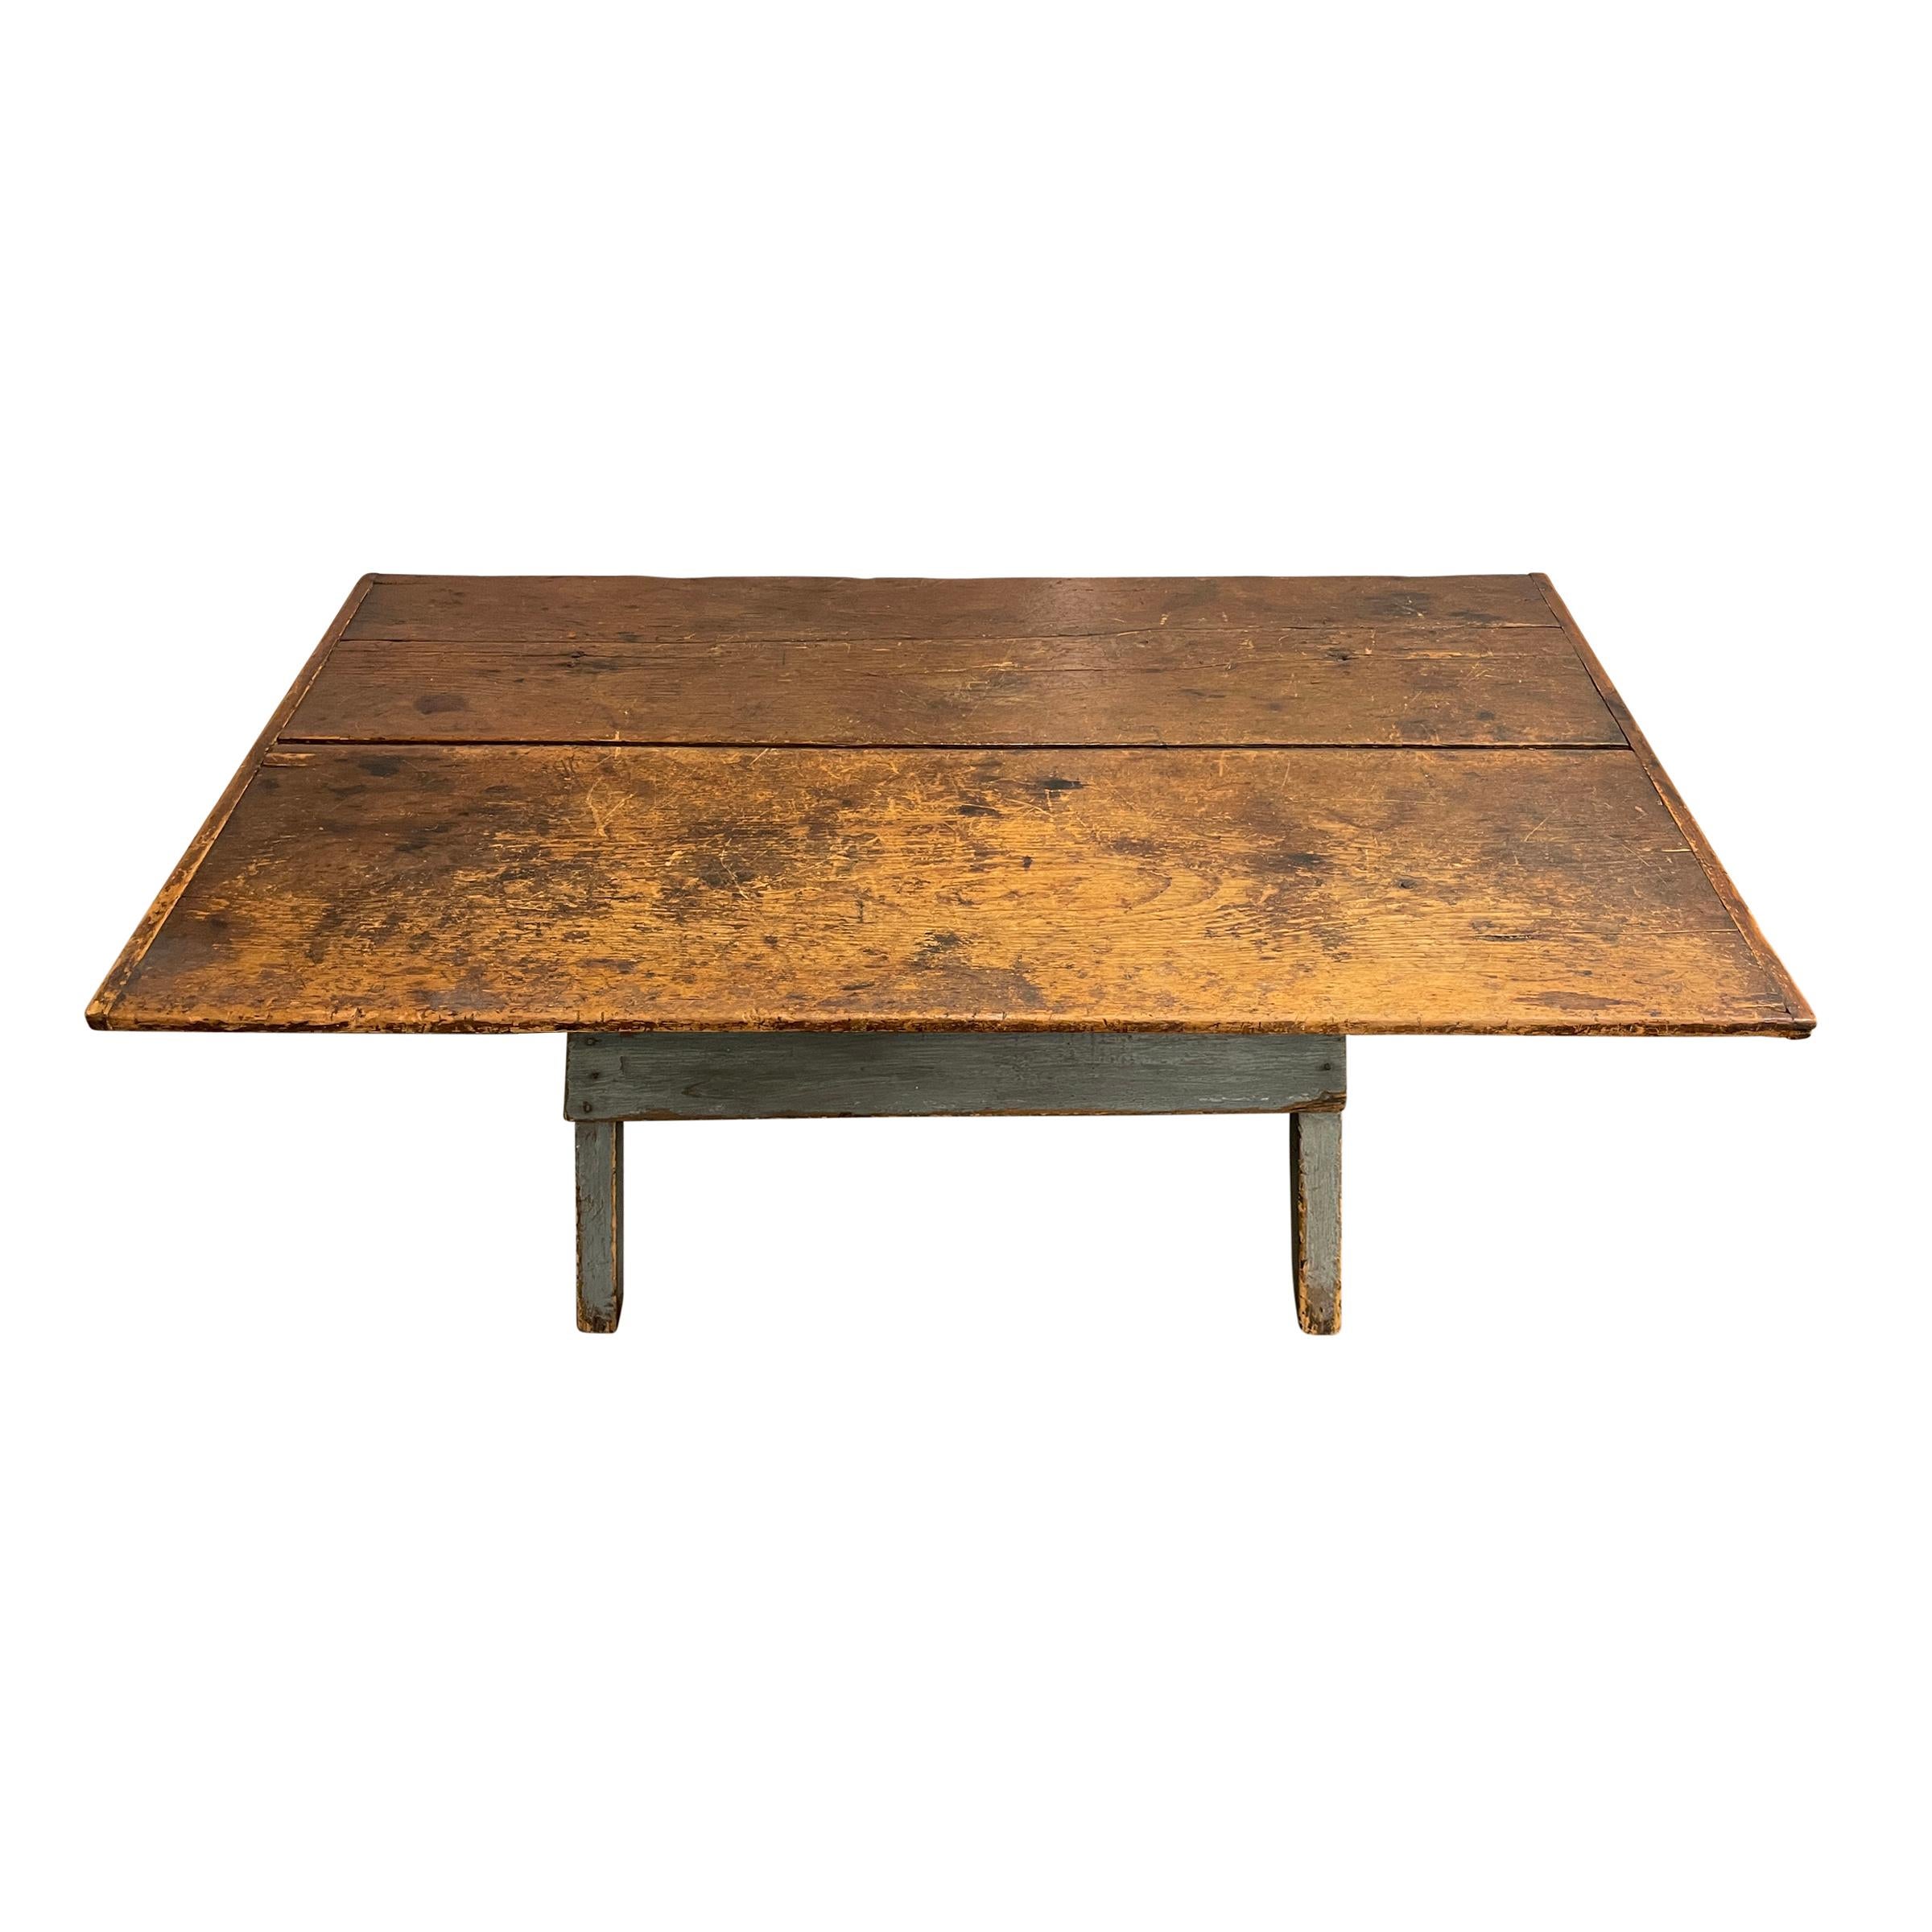 Rustic 19th Century American Sawbuck Table